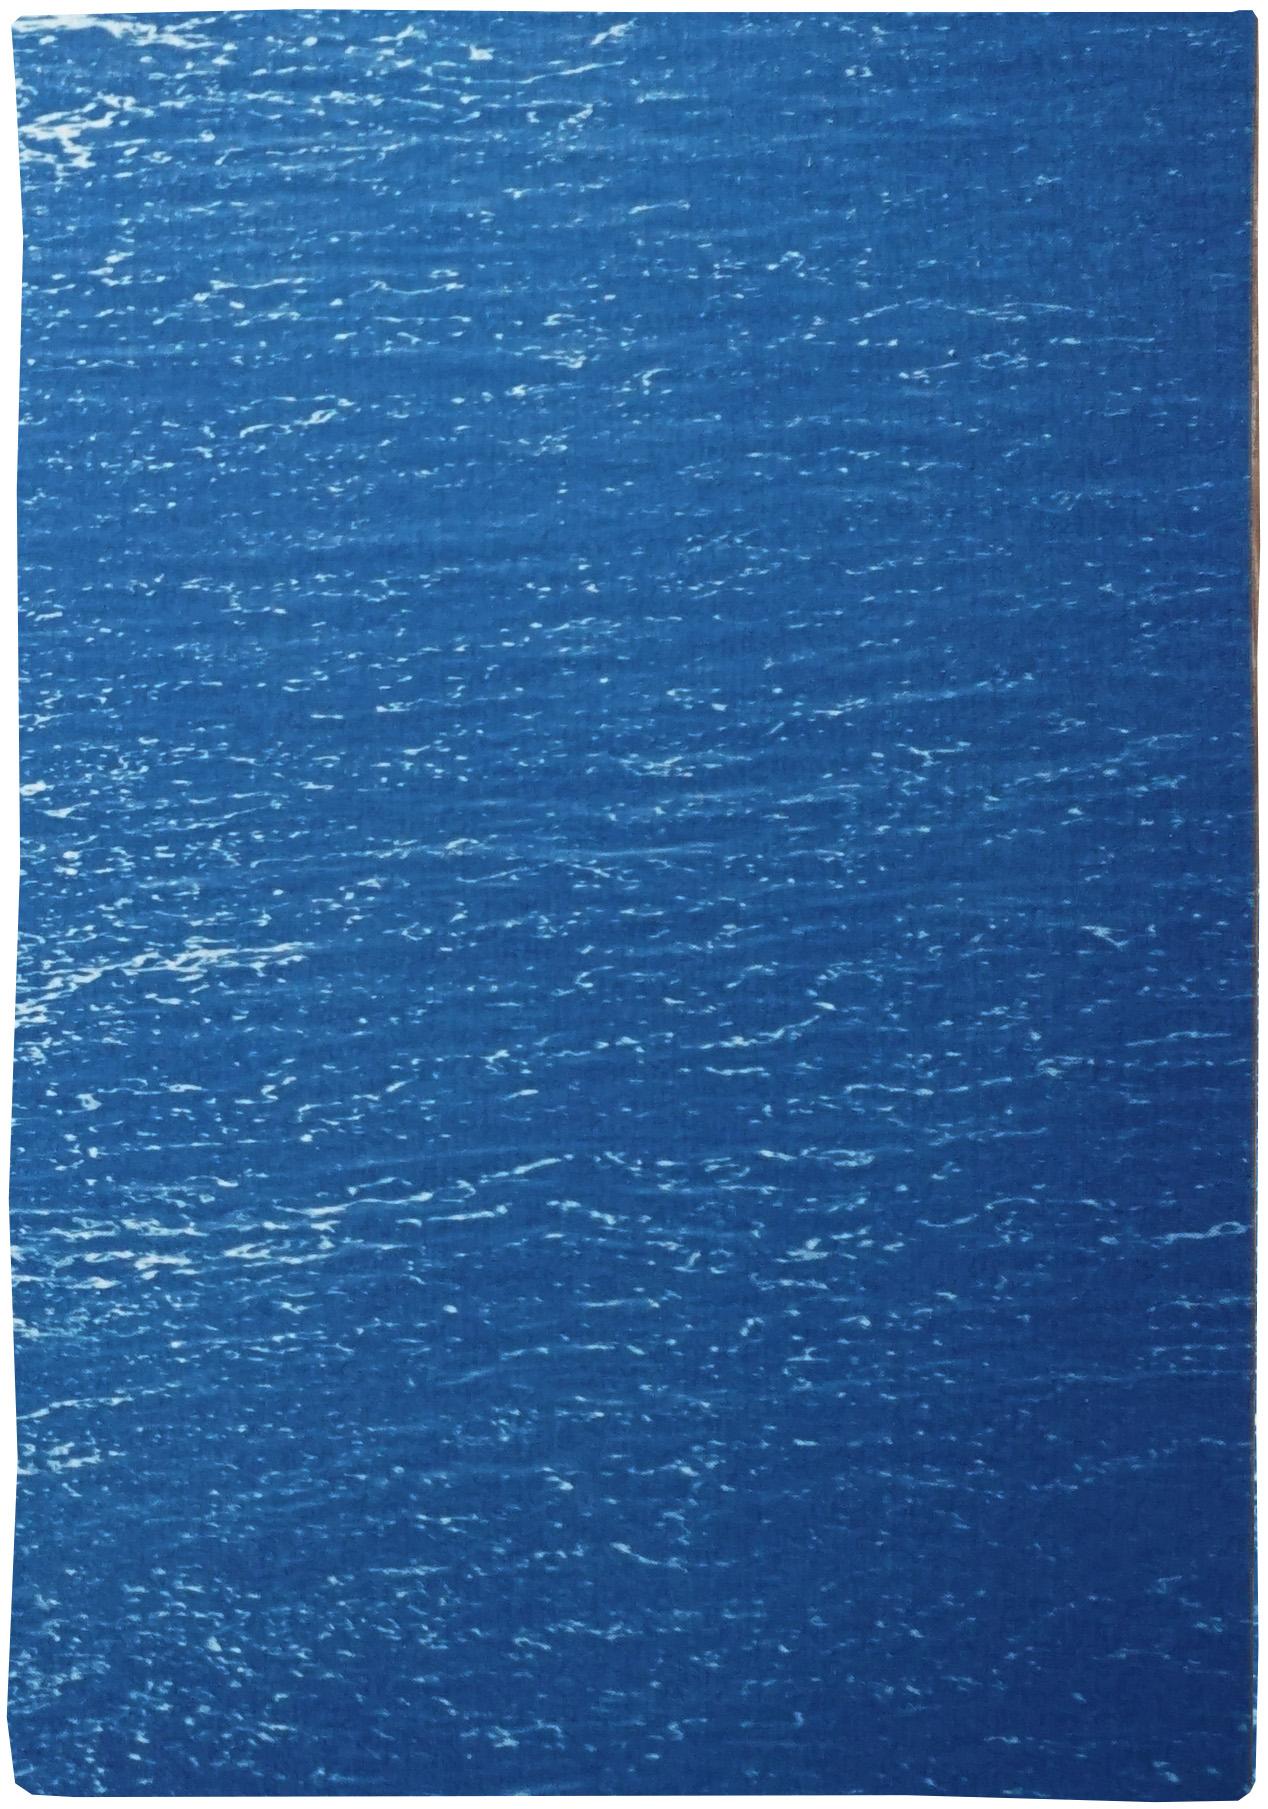 Blue Subtle Seascape of Calm Costa Rica Shore, Minimal Triptych Cyanotype  2